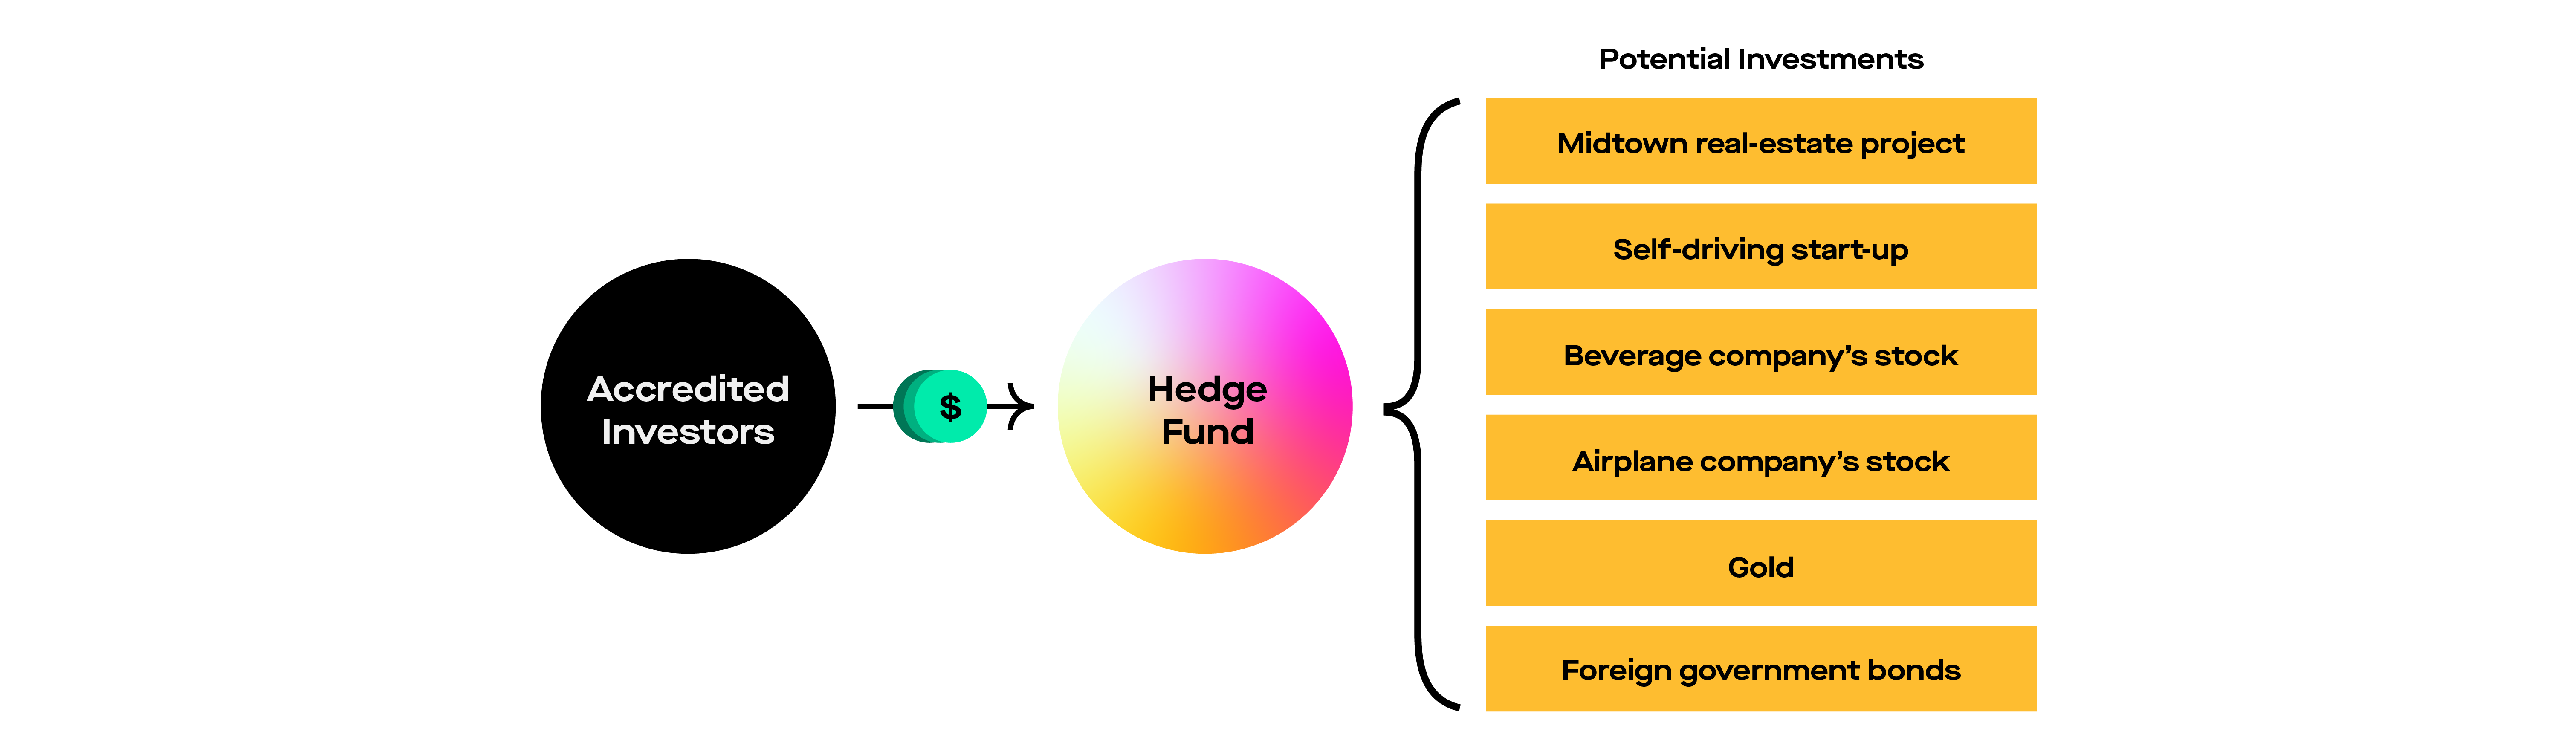 hedge fund definition